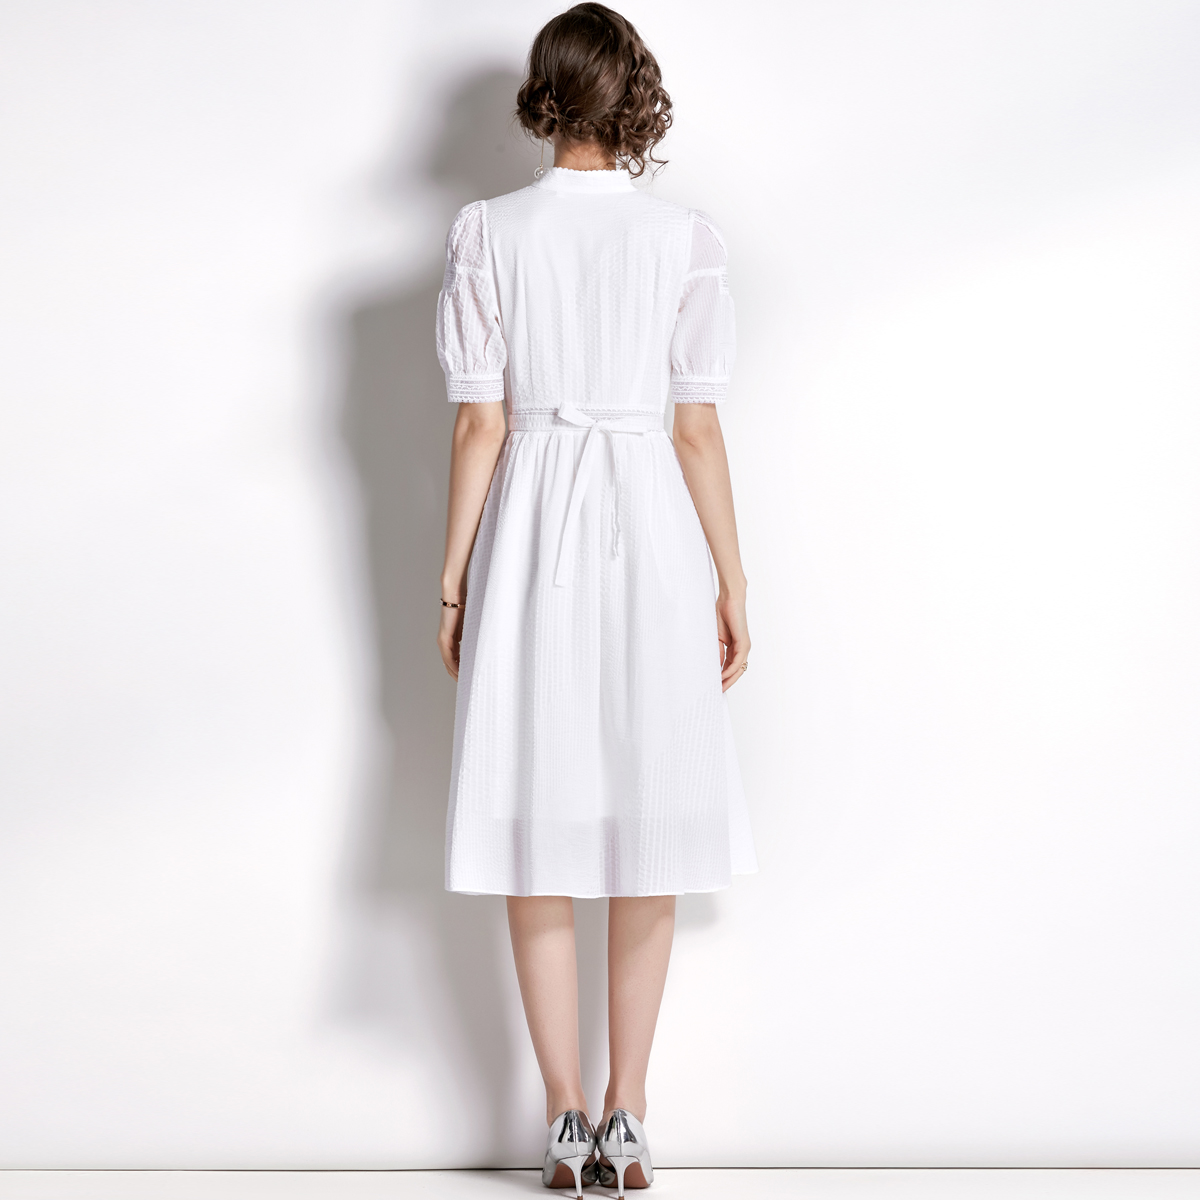 Pinched waist white dress retro long dress for women